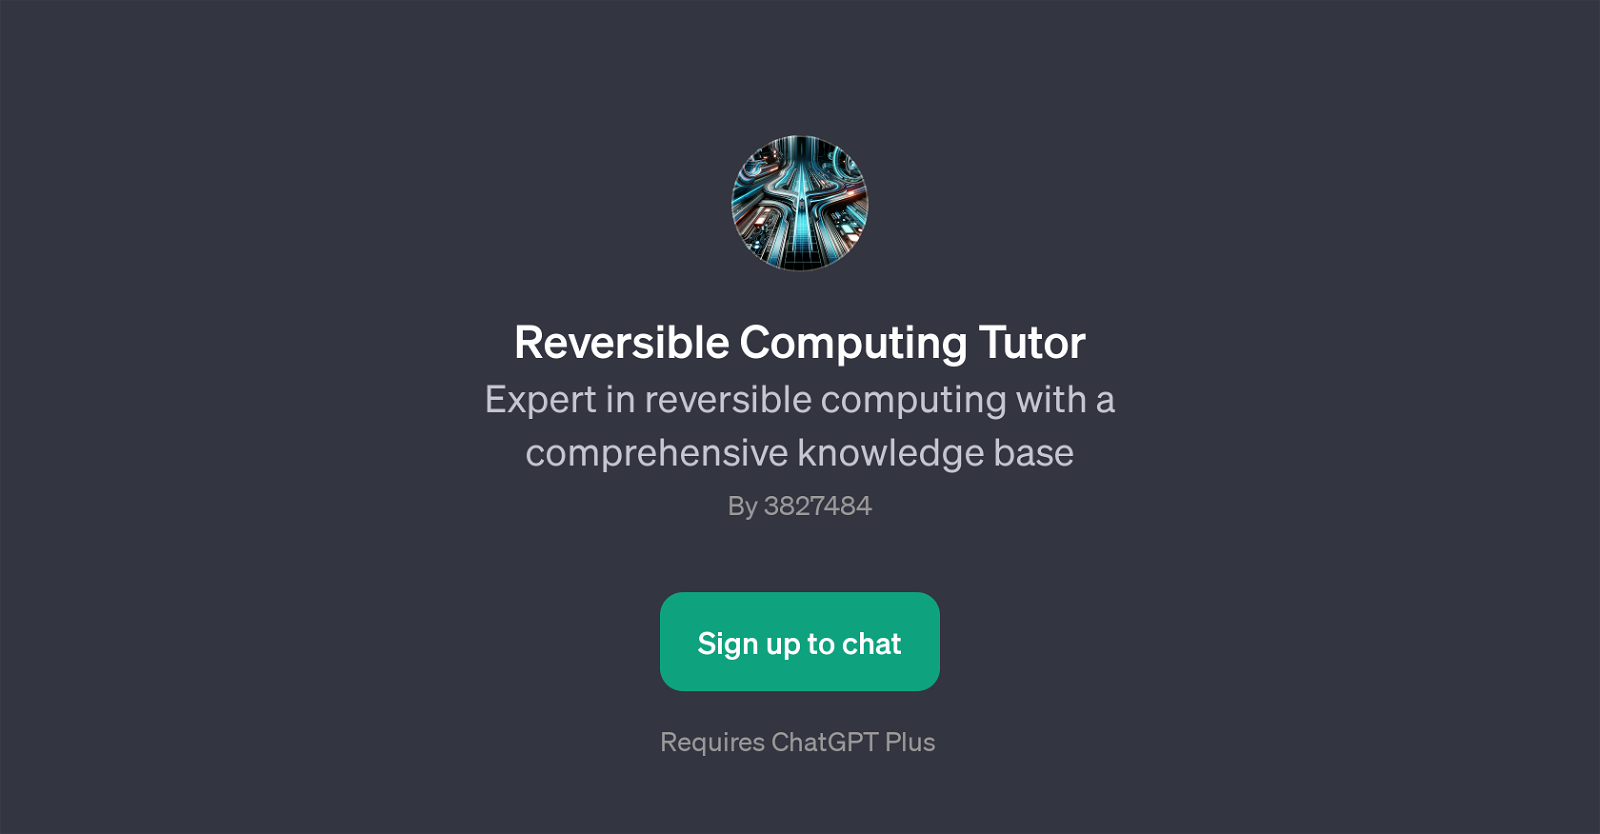 Reversible Computing Tutor website